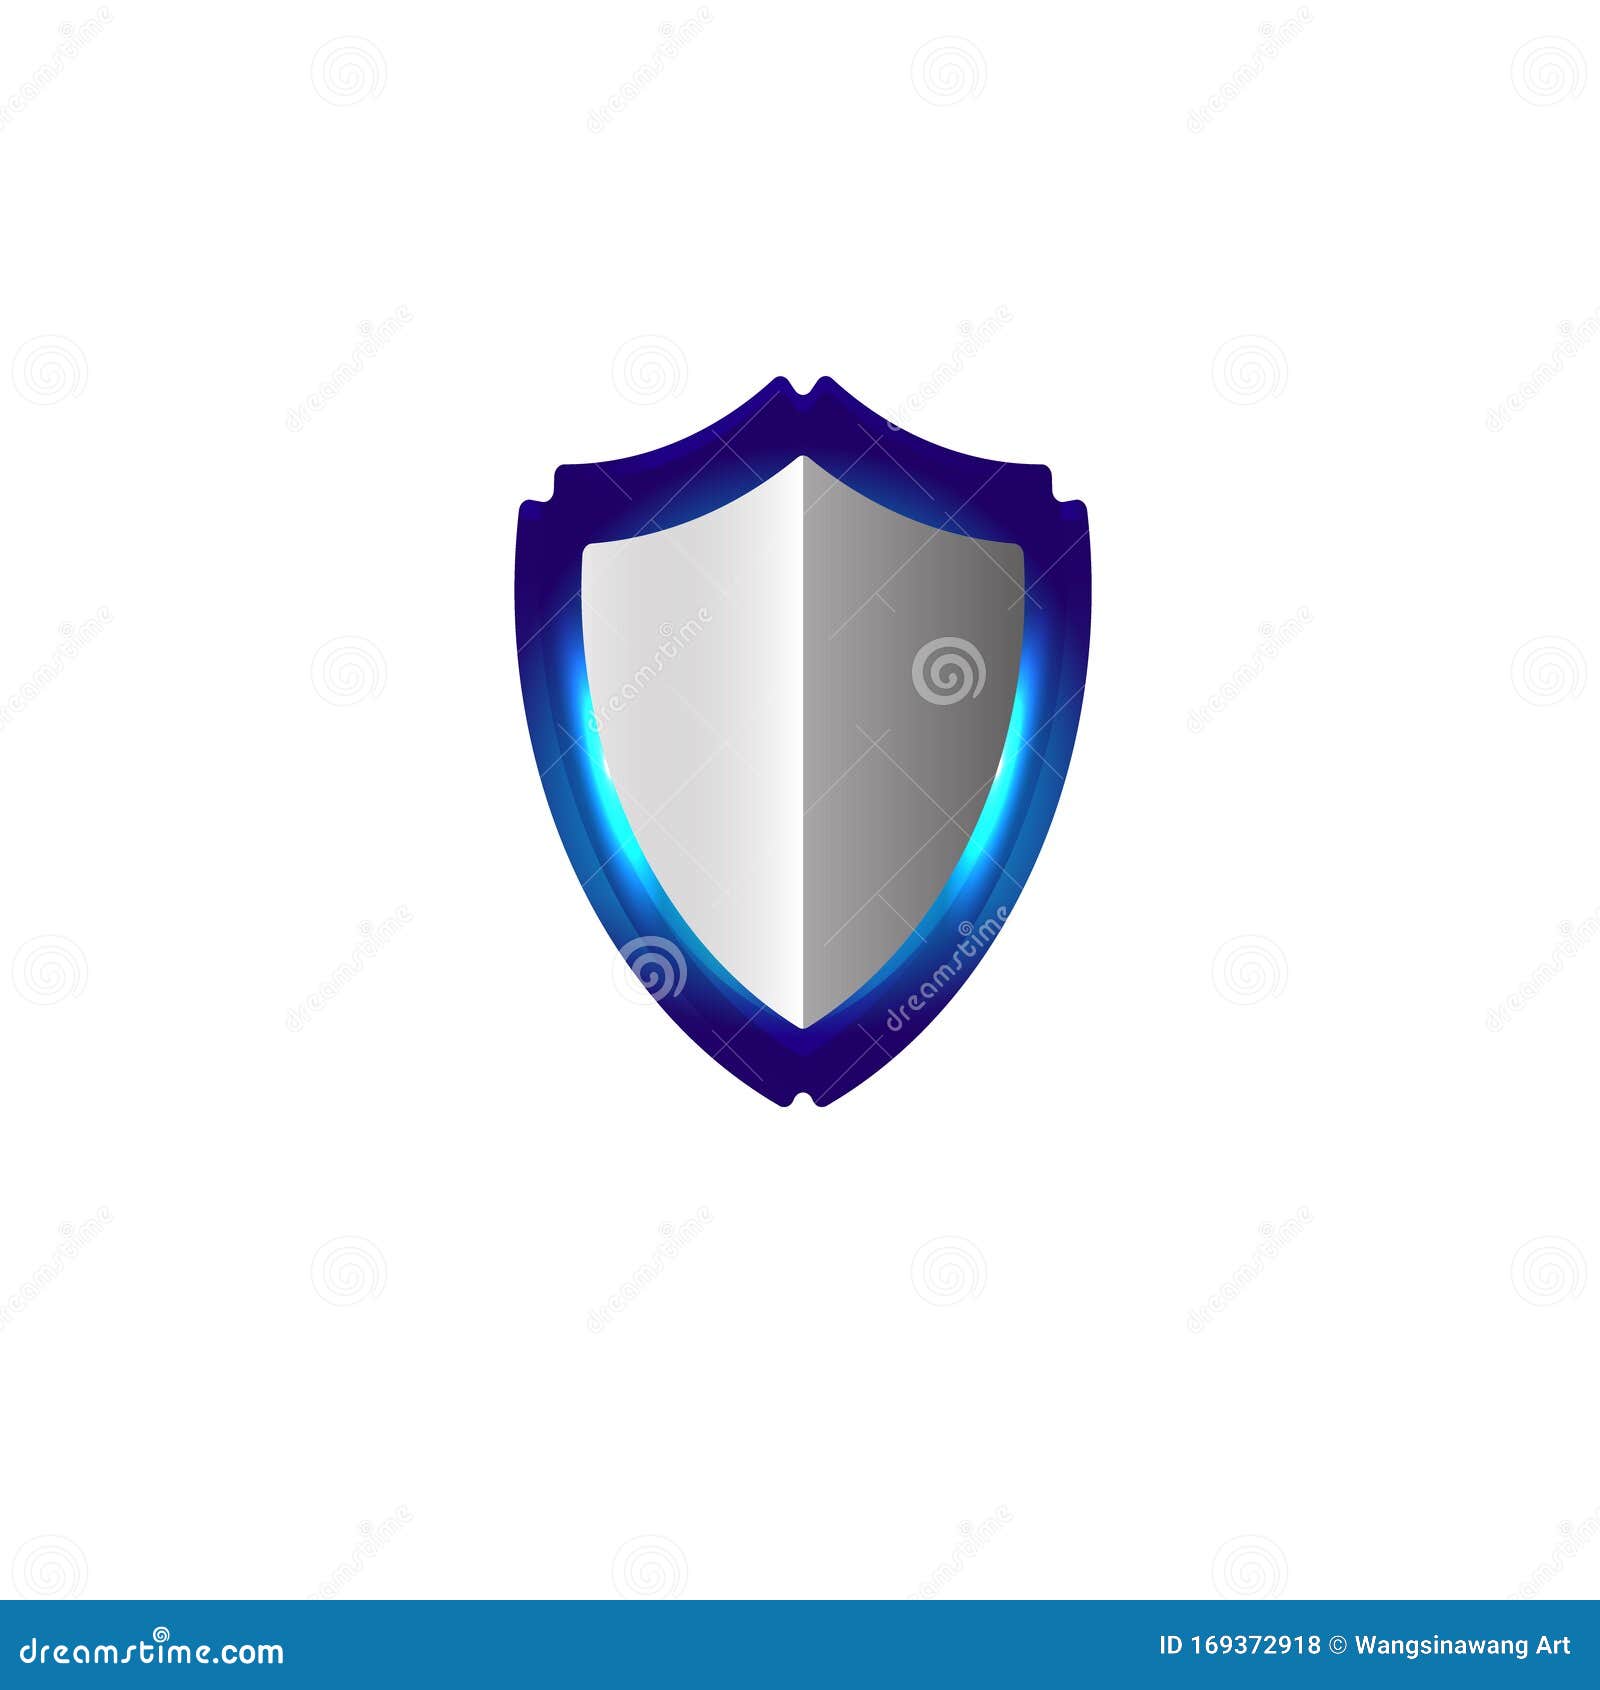 shield logo ideas 3